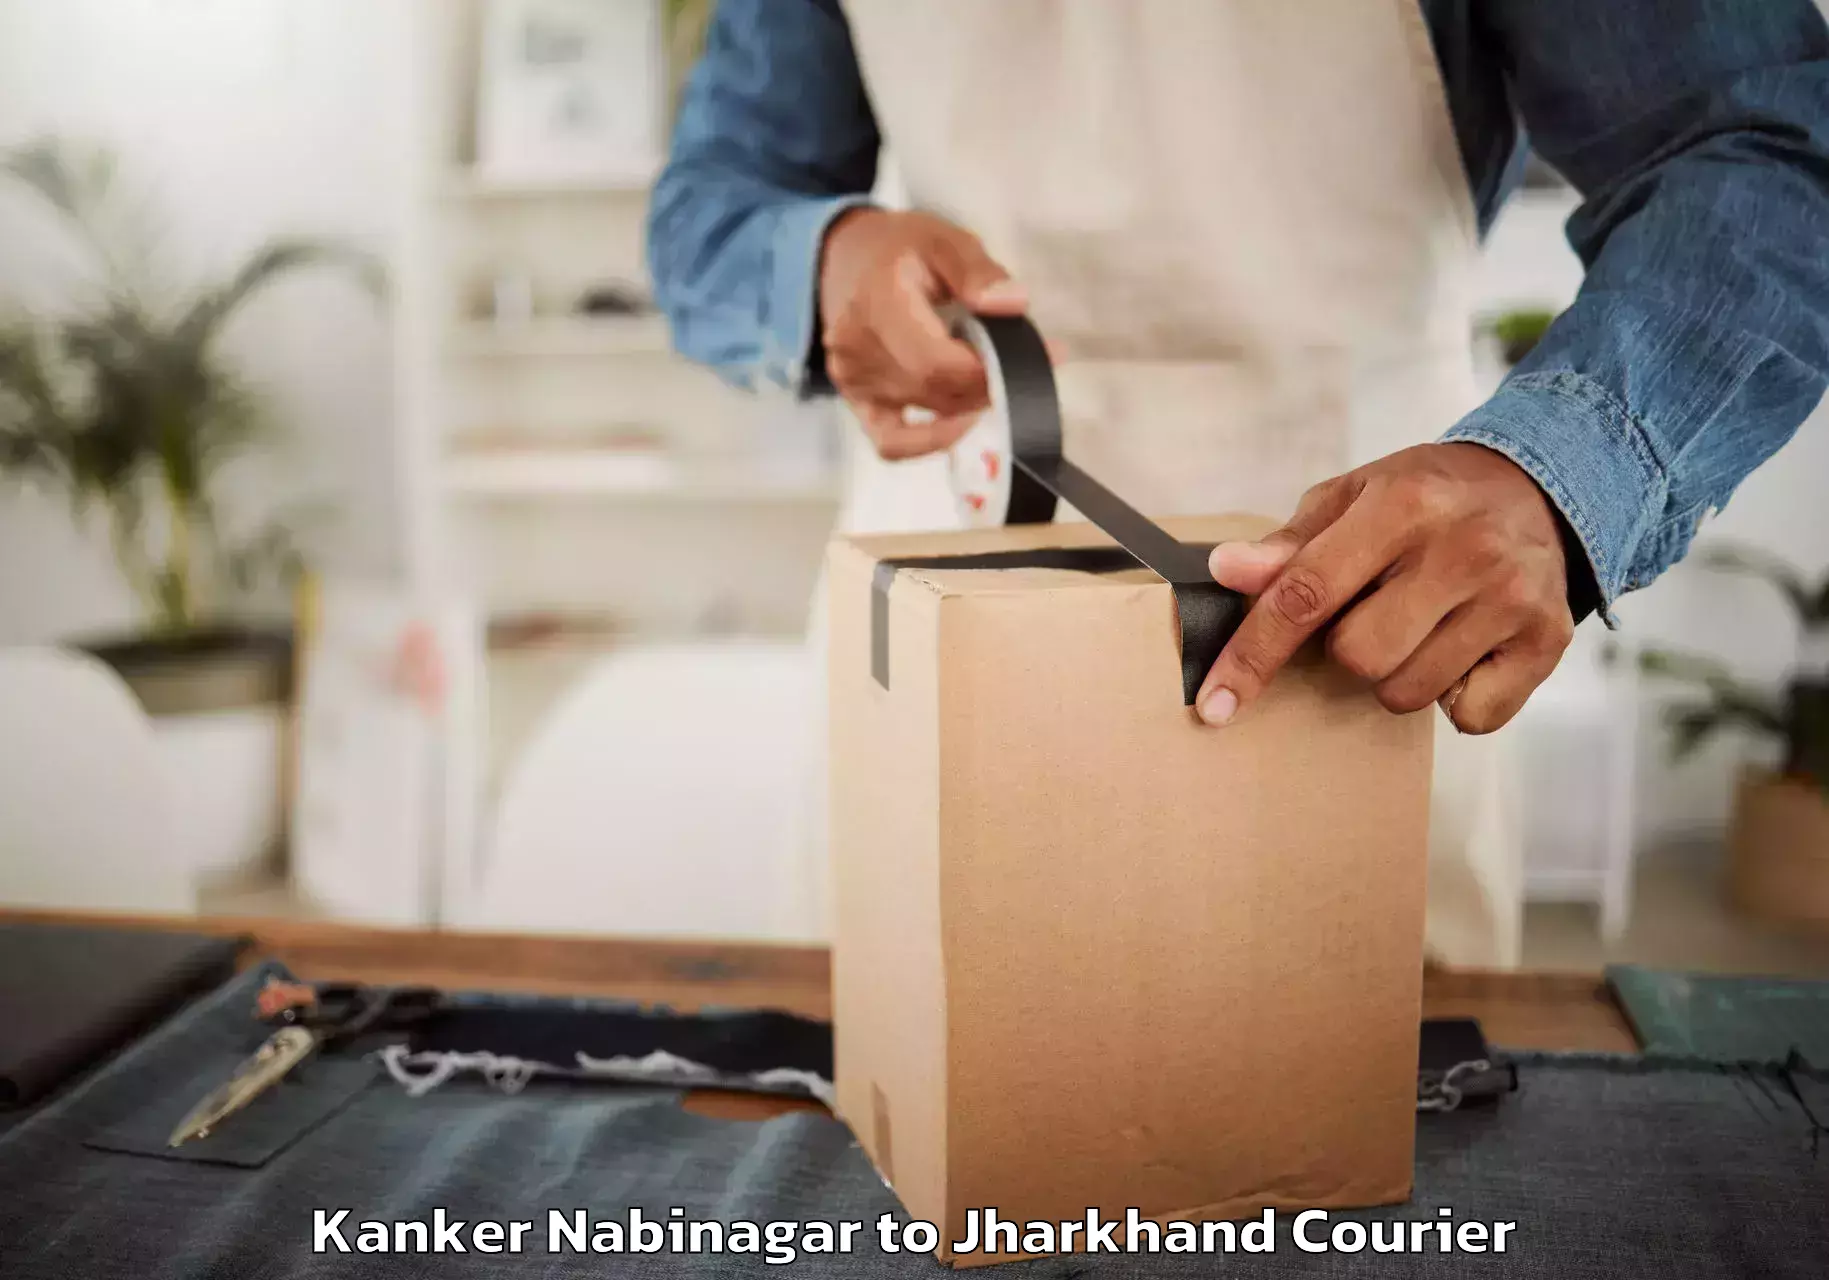 Professional moving company Kanker Nabinagar to Dhanbad